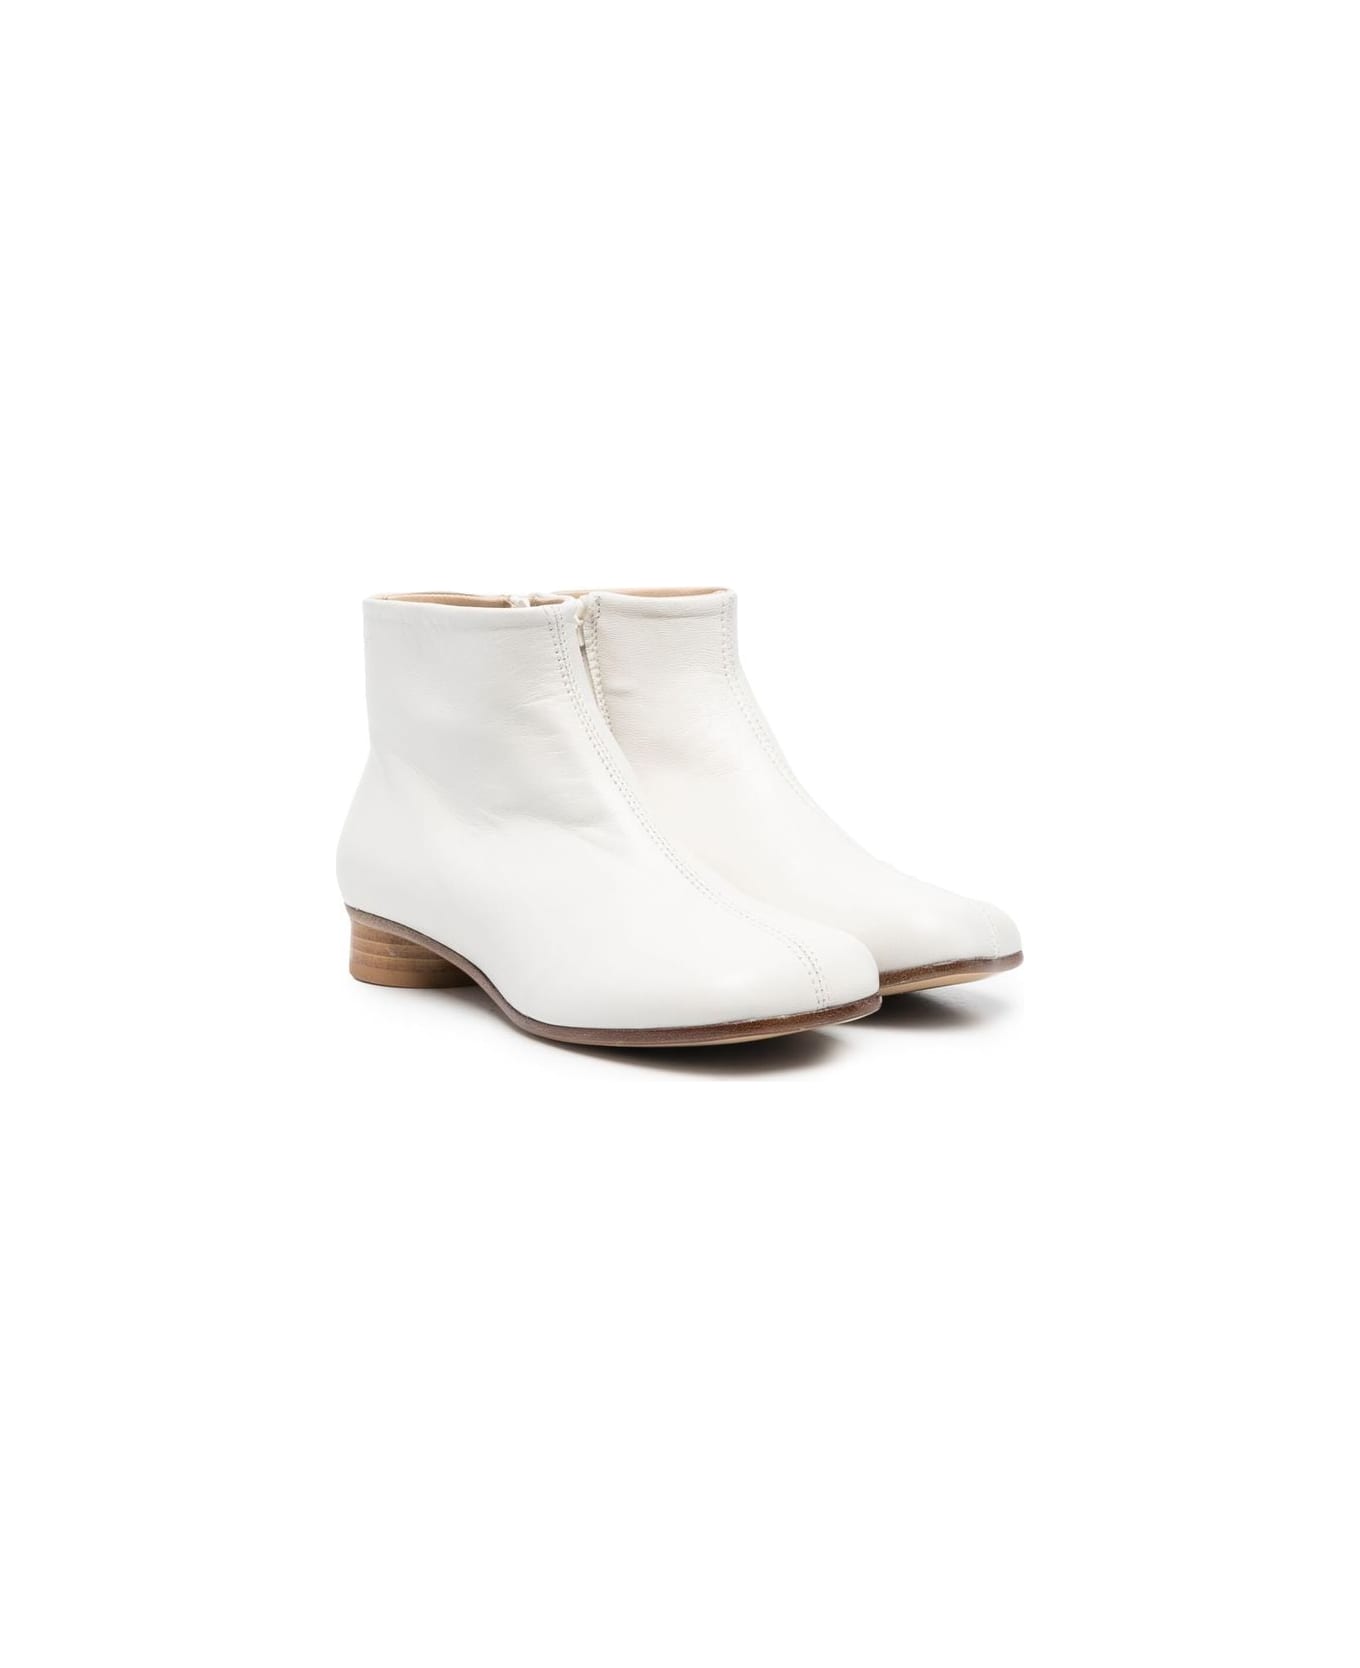 MM6 Maison Margiela White Ankle Boots - White